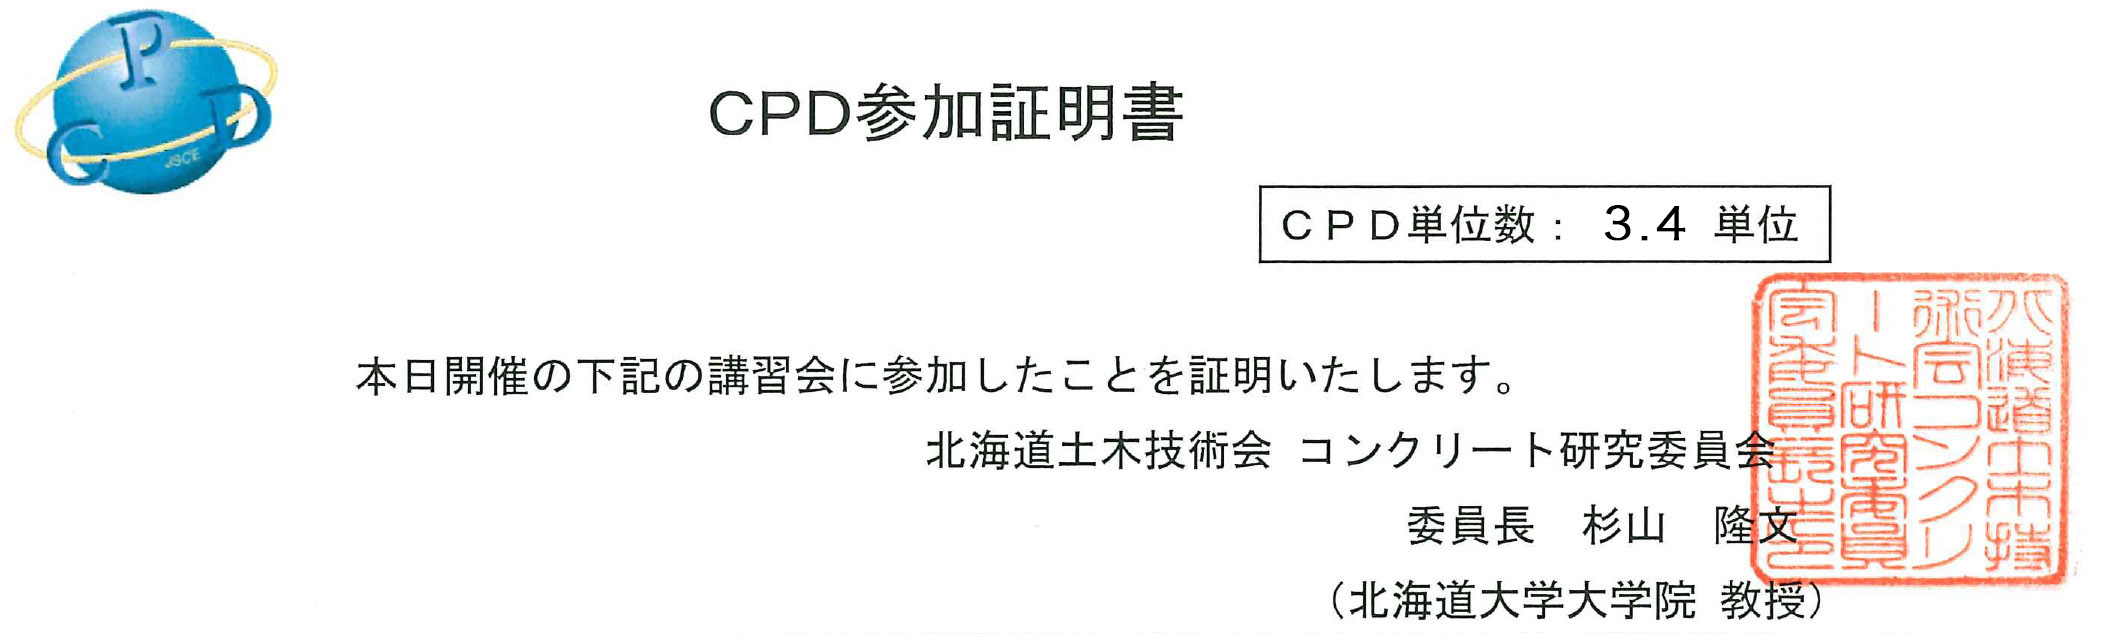 CPD_certificate-top